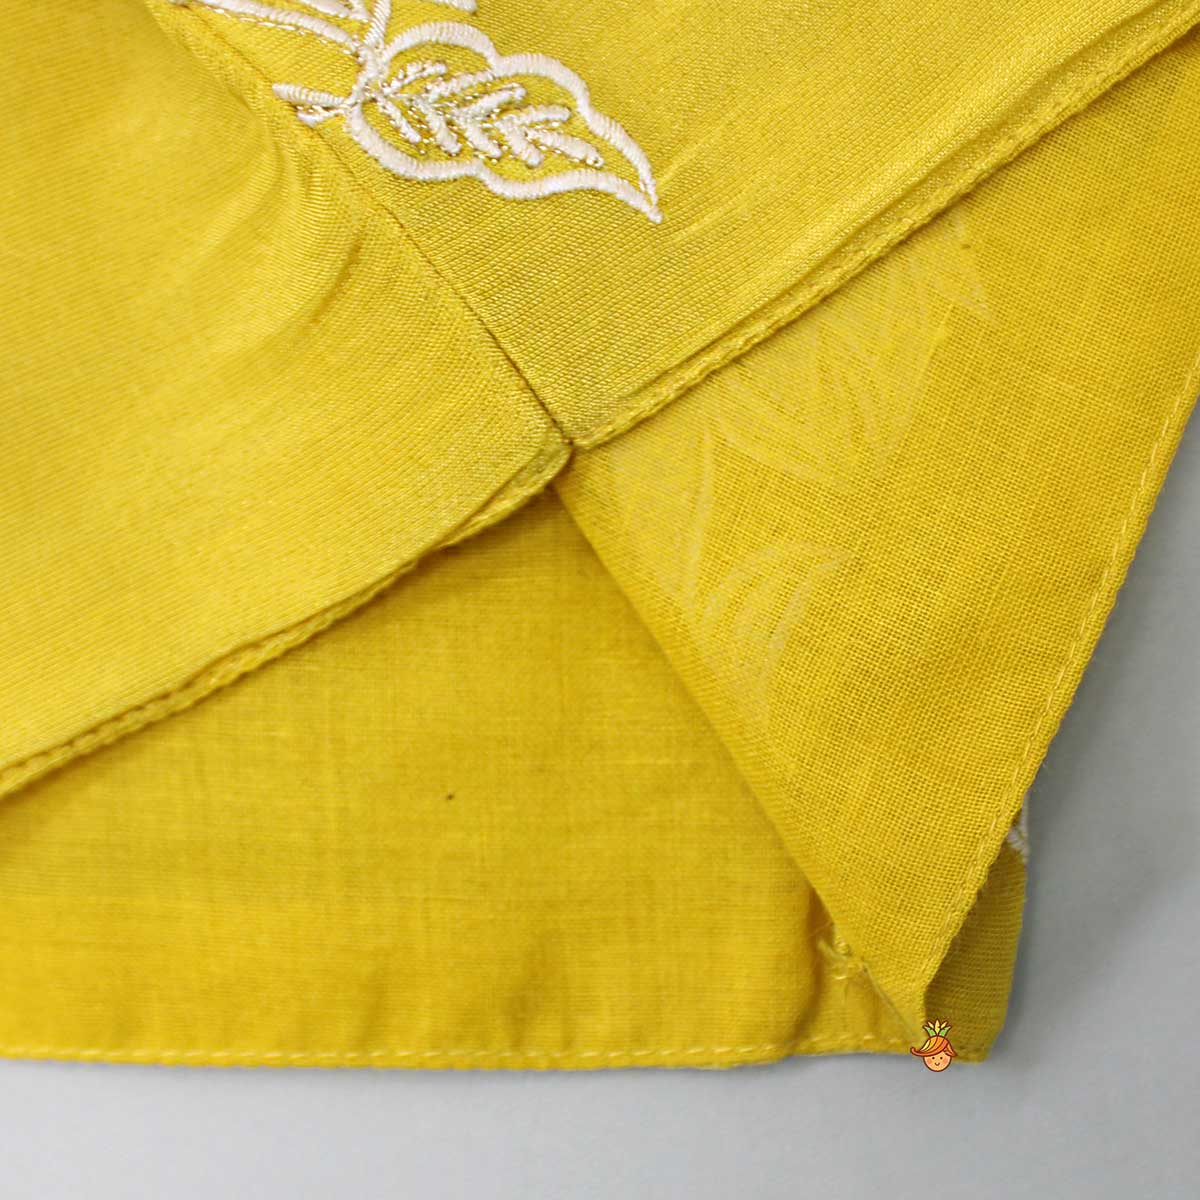 Pleated Neckline Yellow Top And Fringes Tassels Enhanced Lehenga